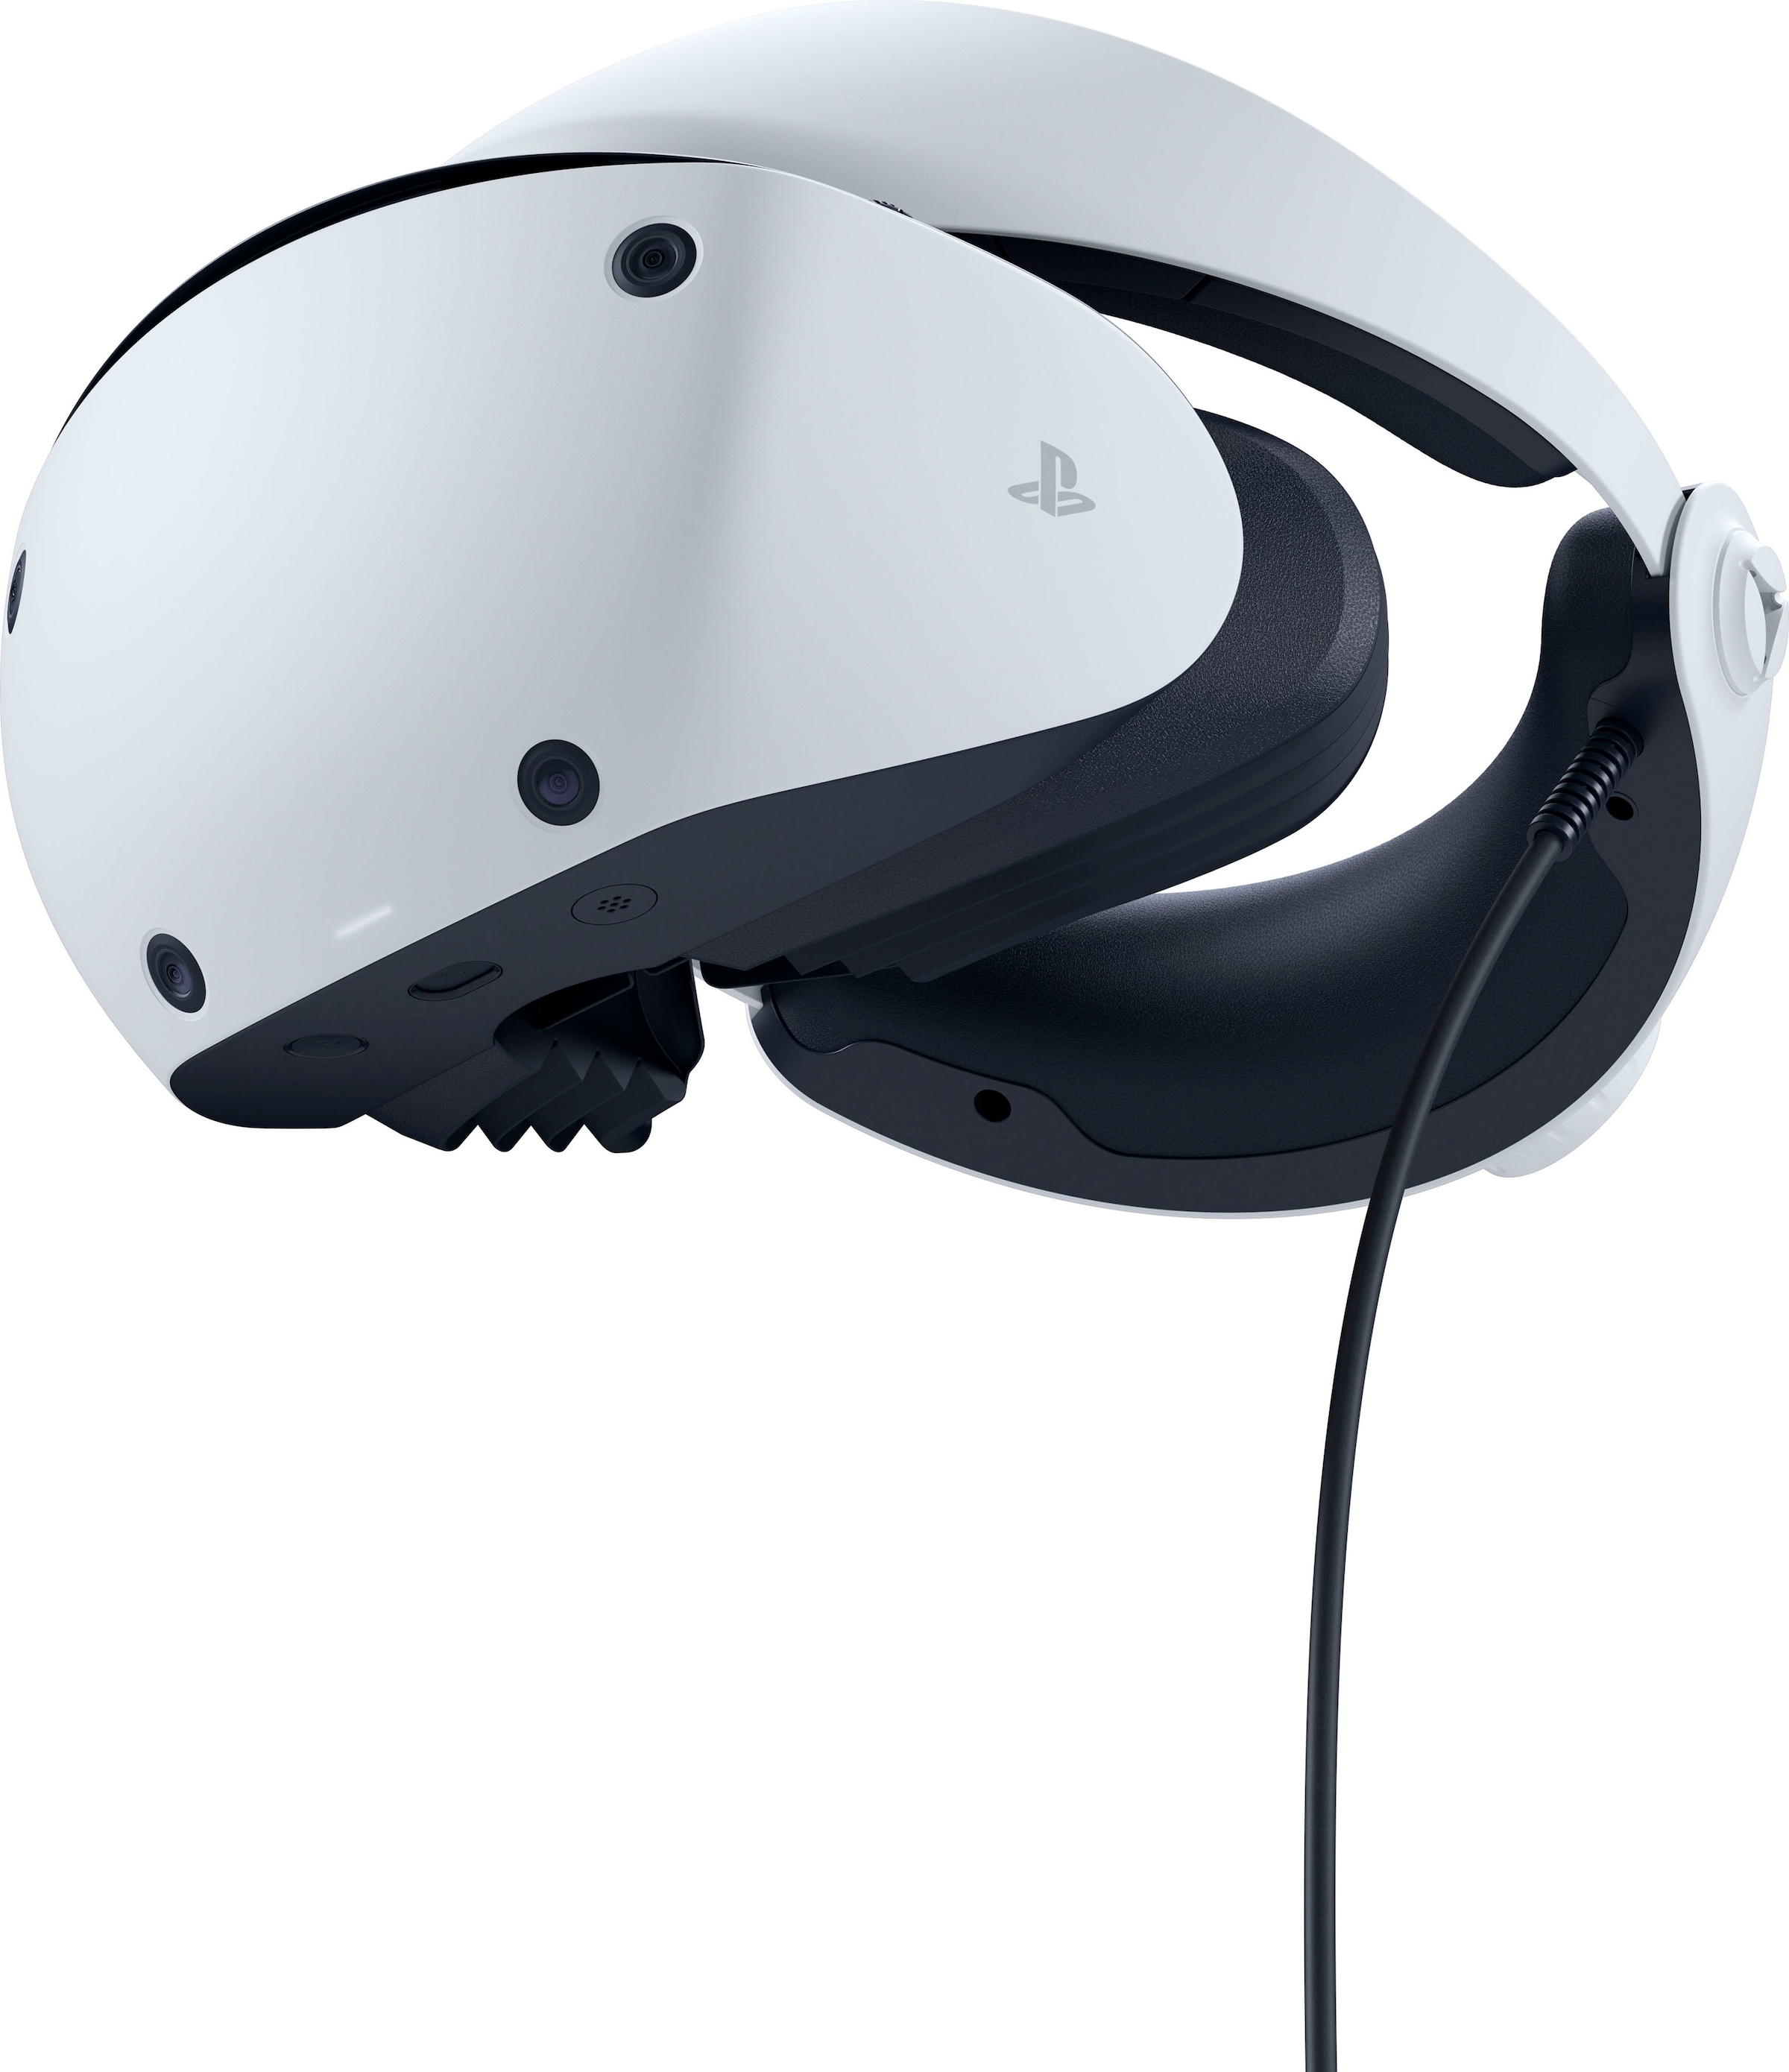 PlayStation 5 Virtual-Reality-Brille »PlayStation®VR2«